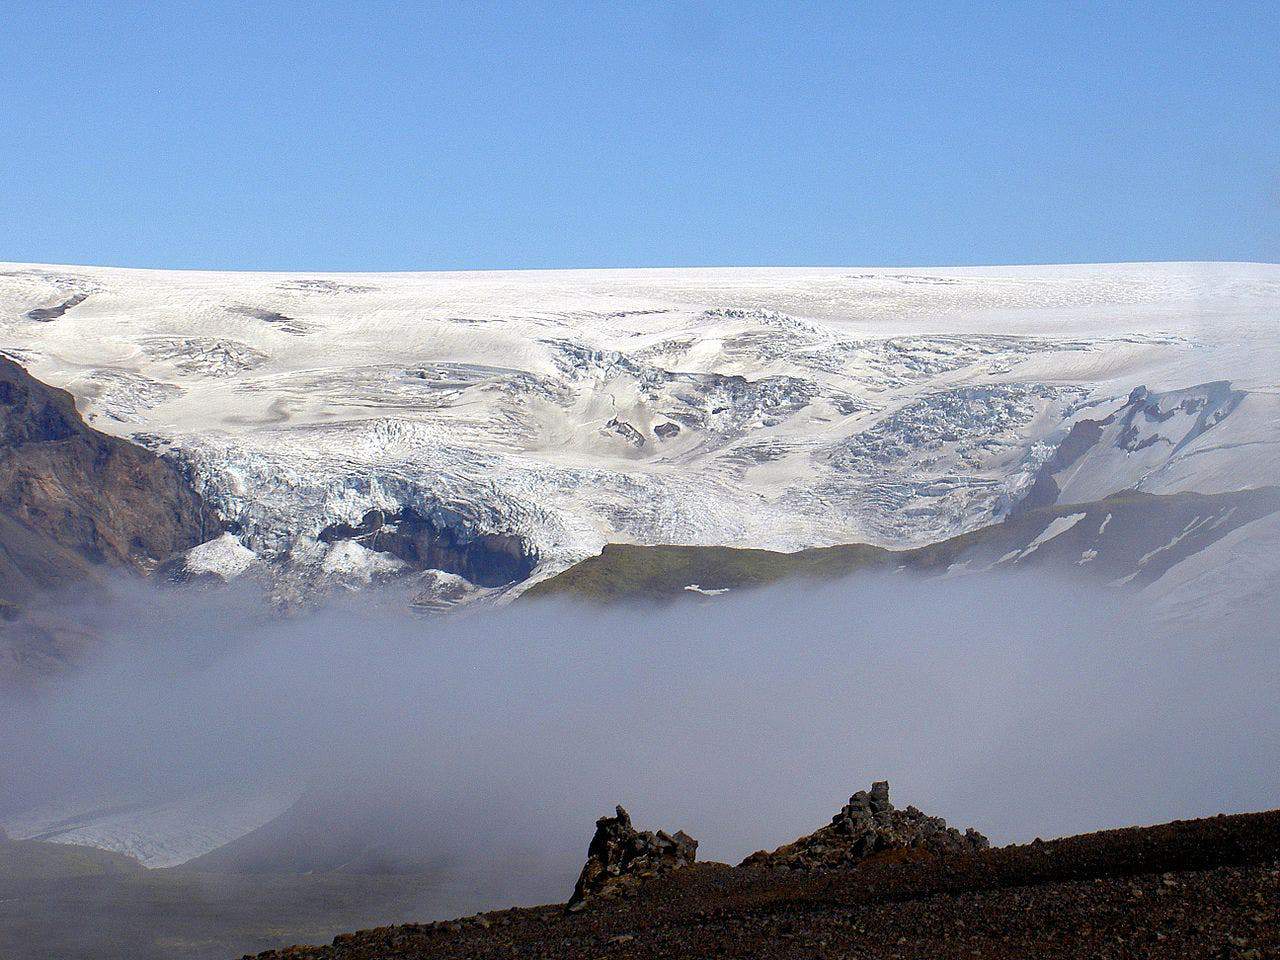 Myrdalsjökull glacier, above the volcano. Photo by Chris73.